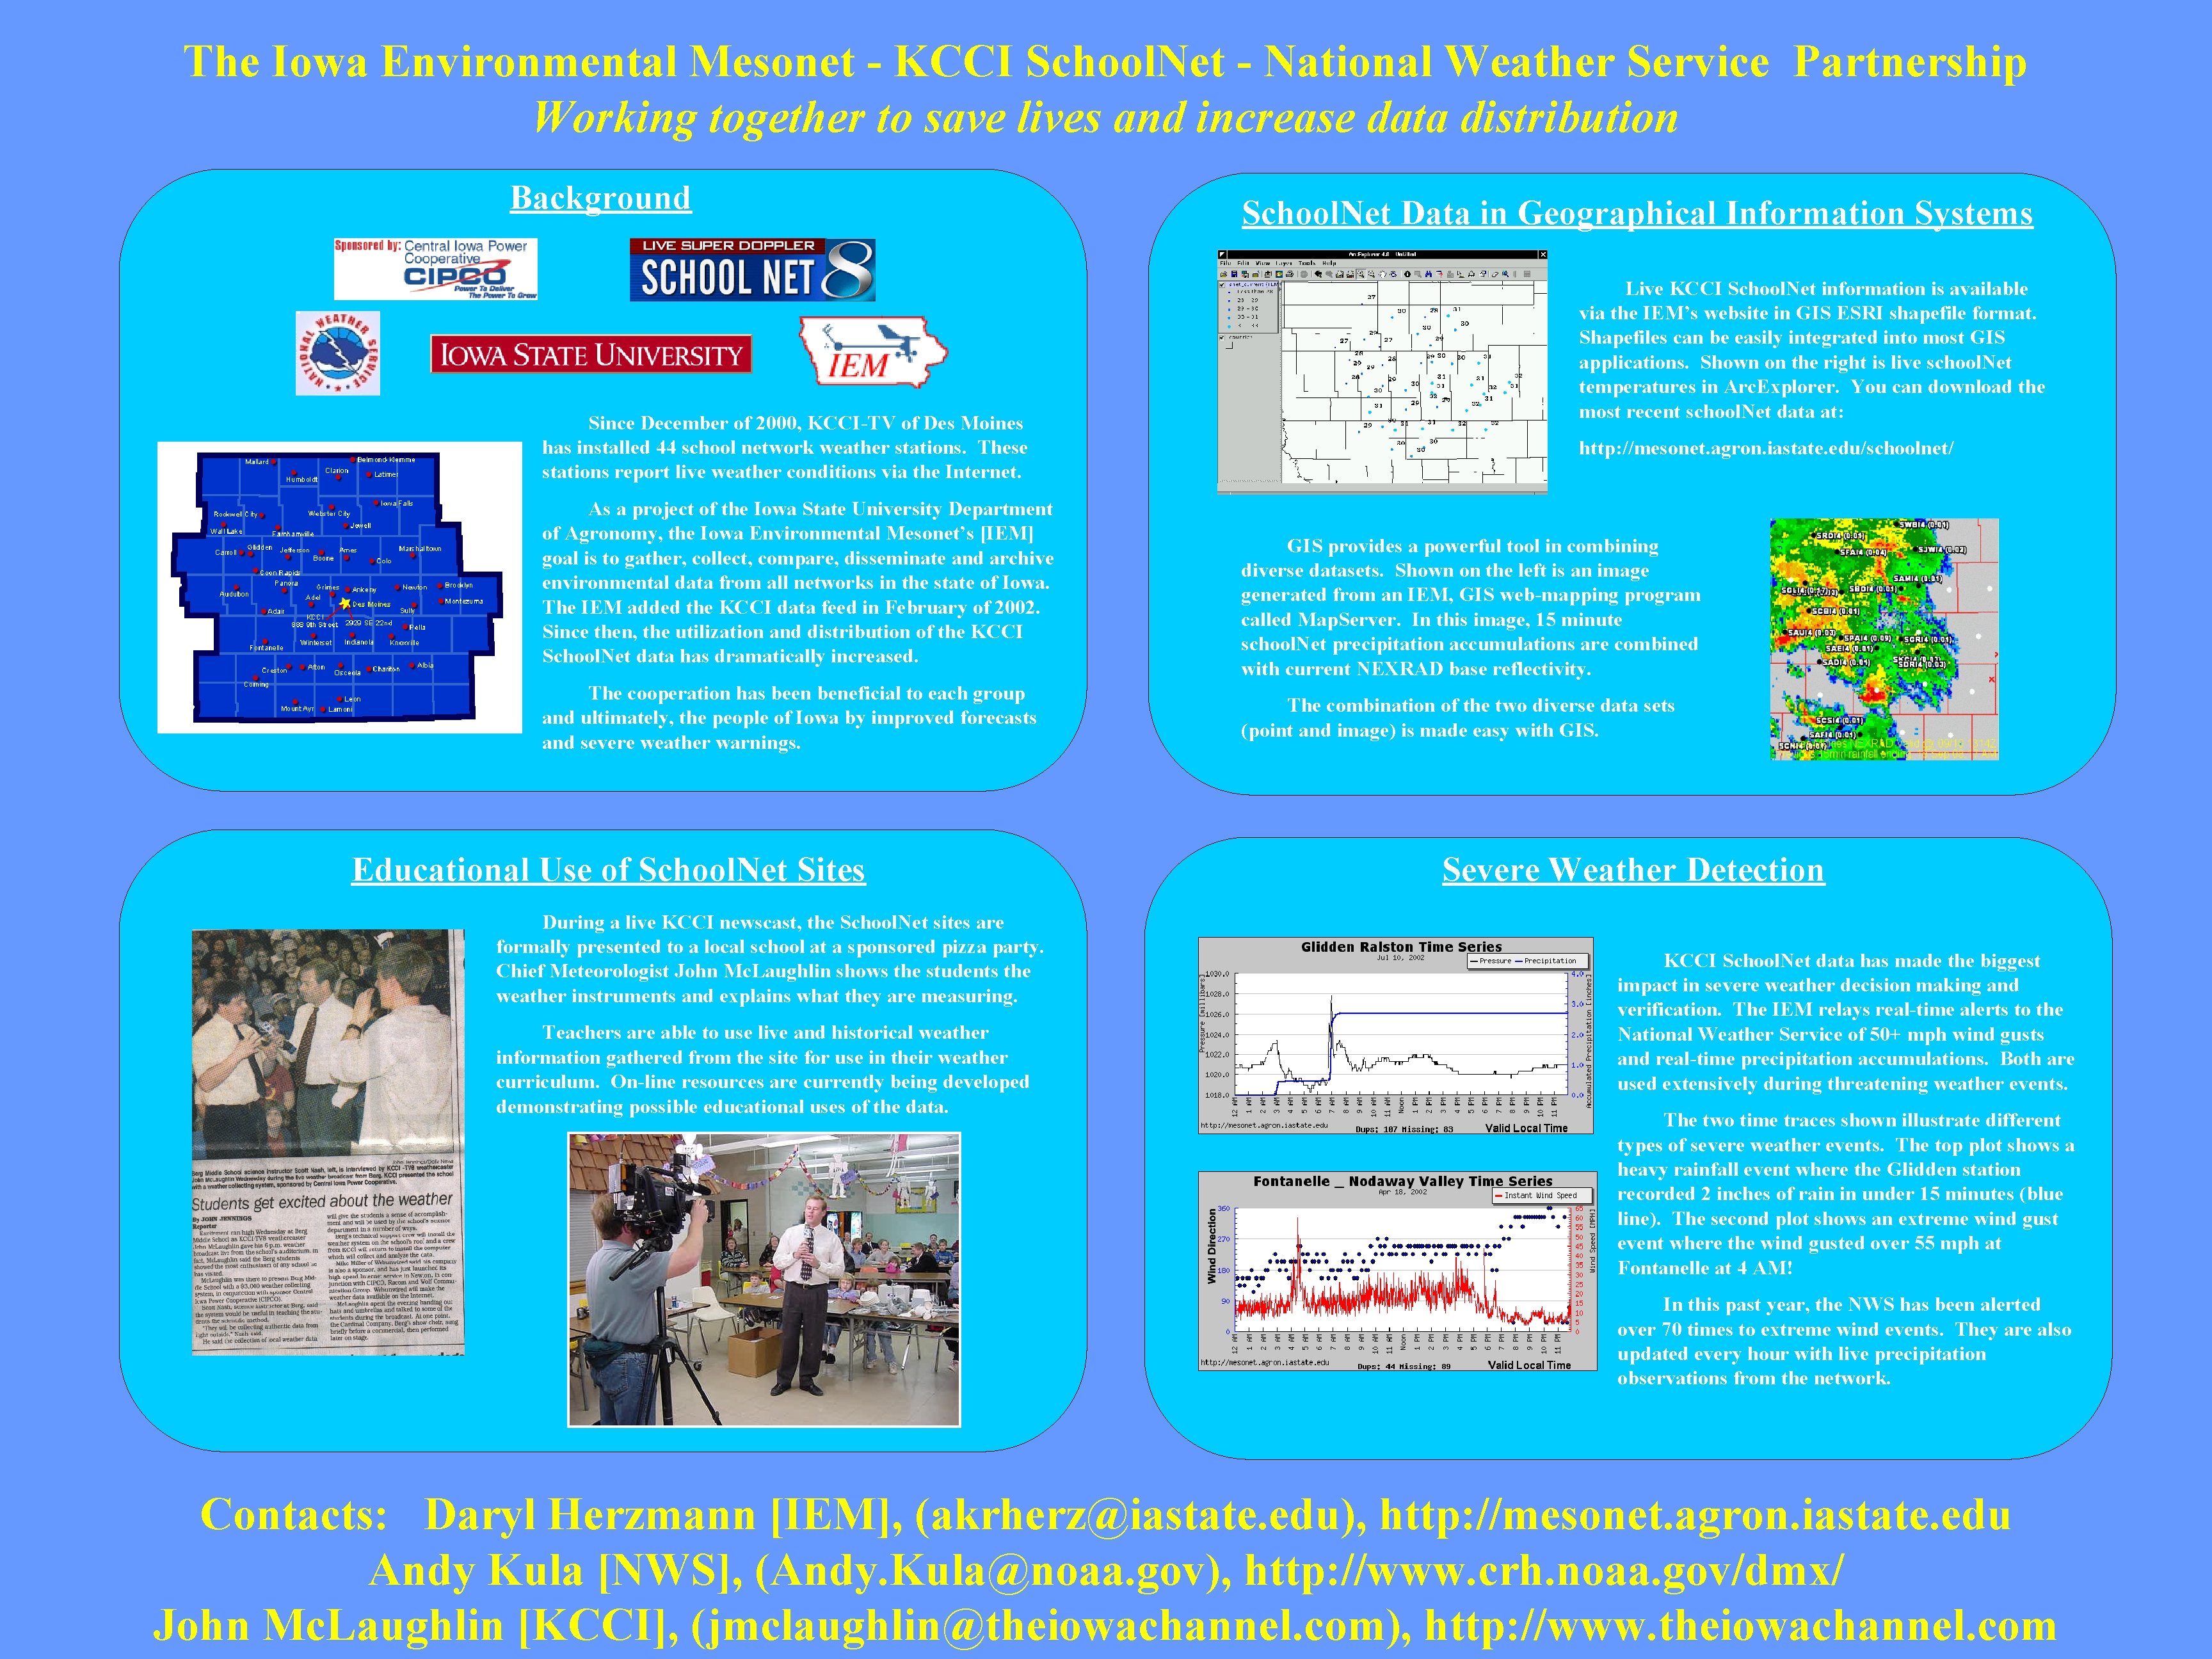 The Iowa Environmental Mesonet - KCCI School. Net - National Weather Service Partnership Working